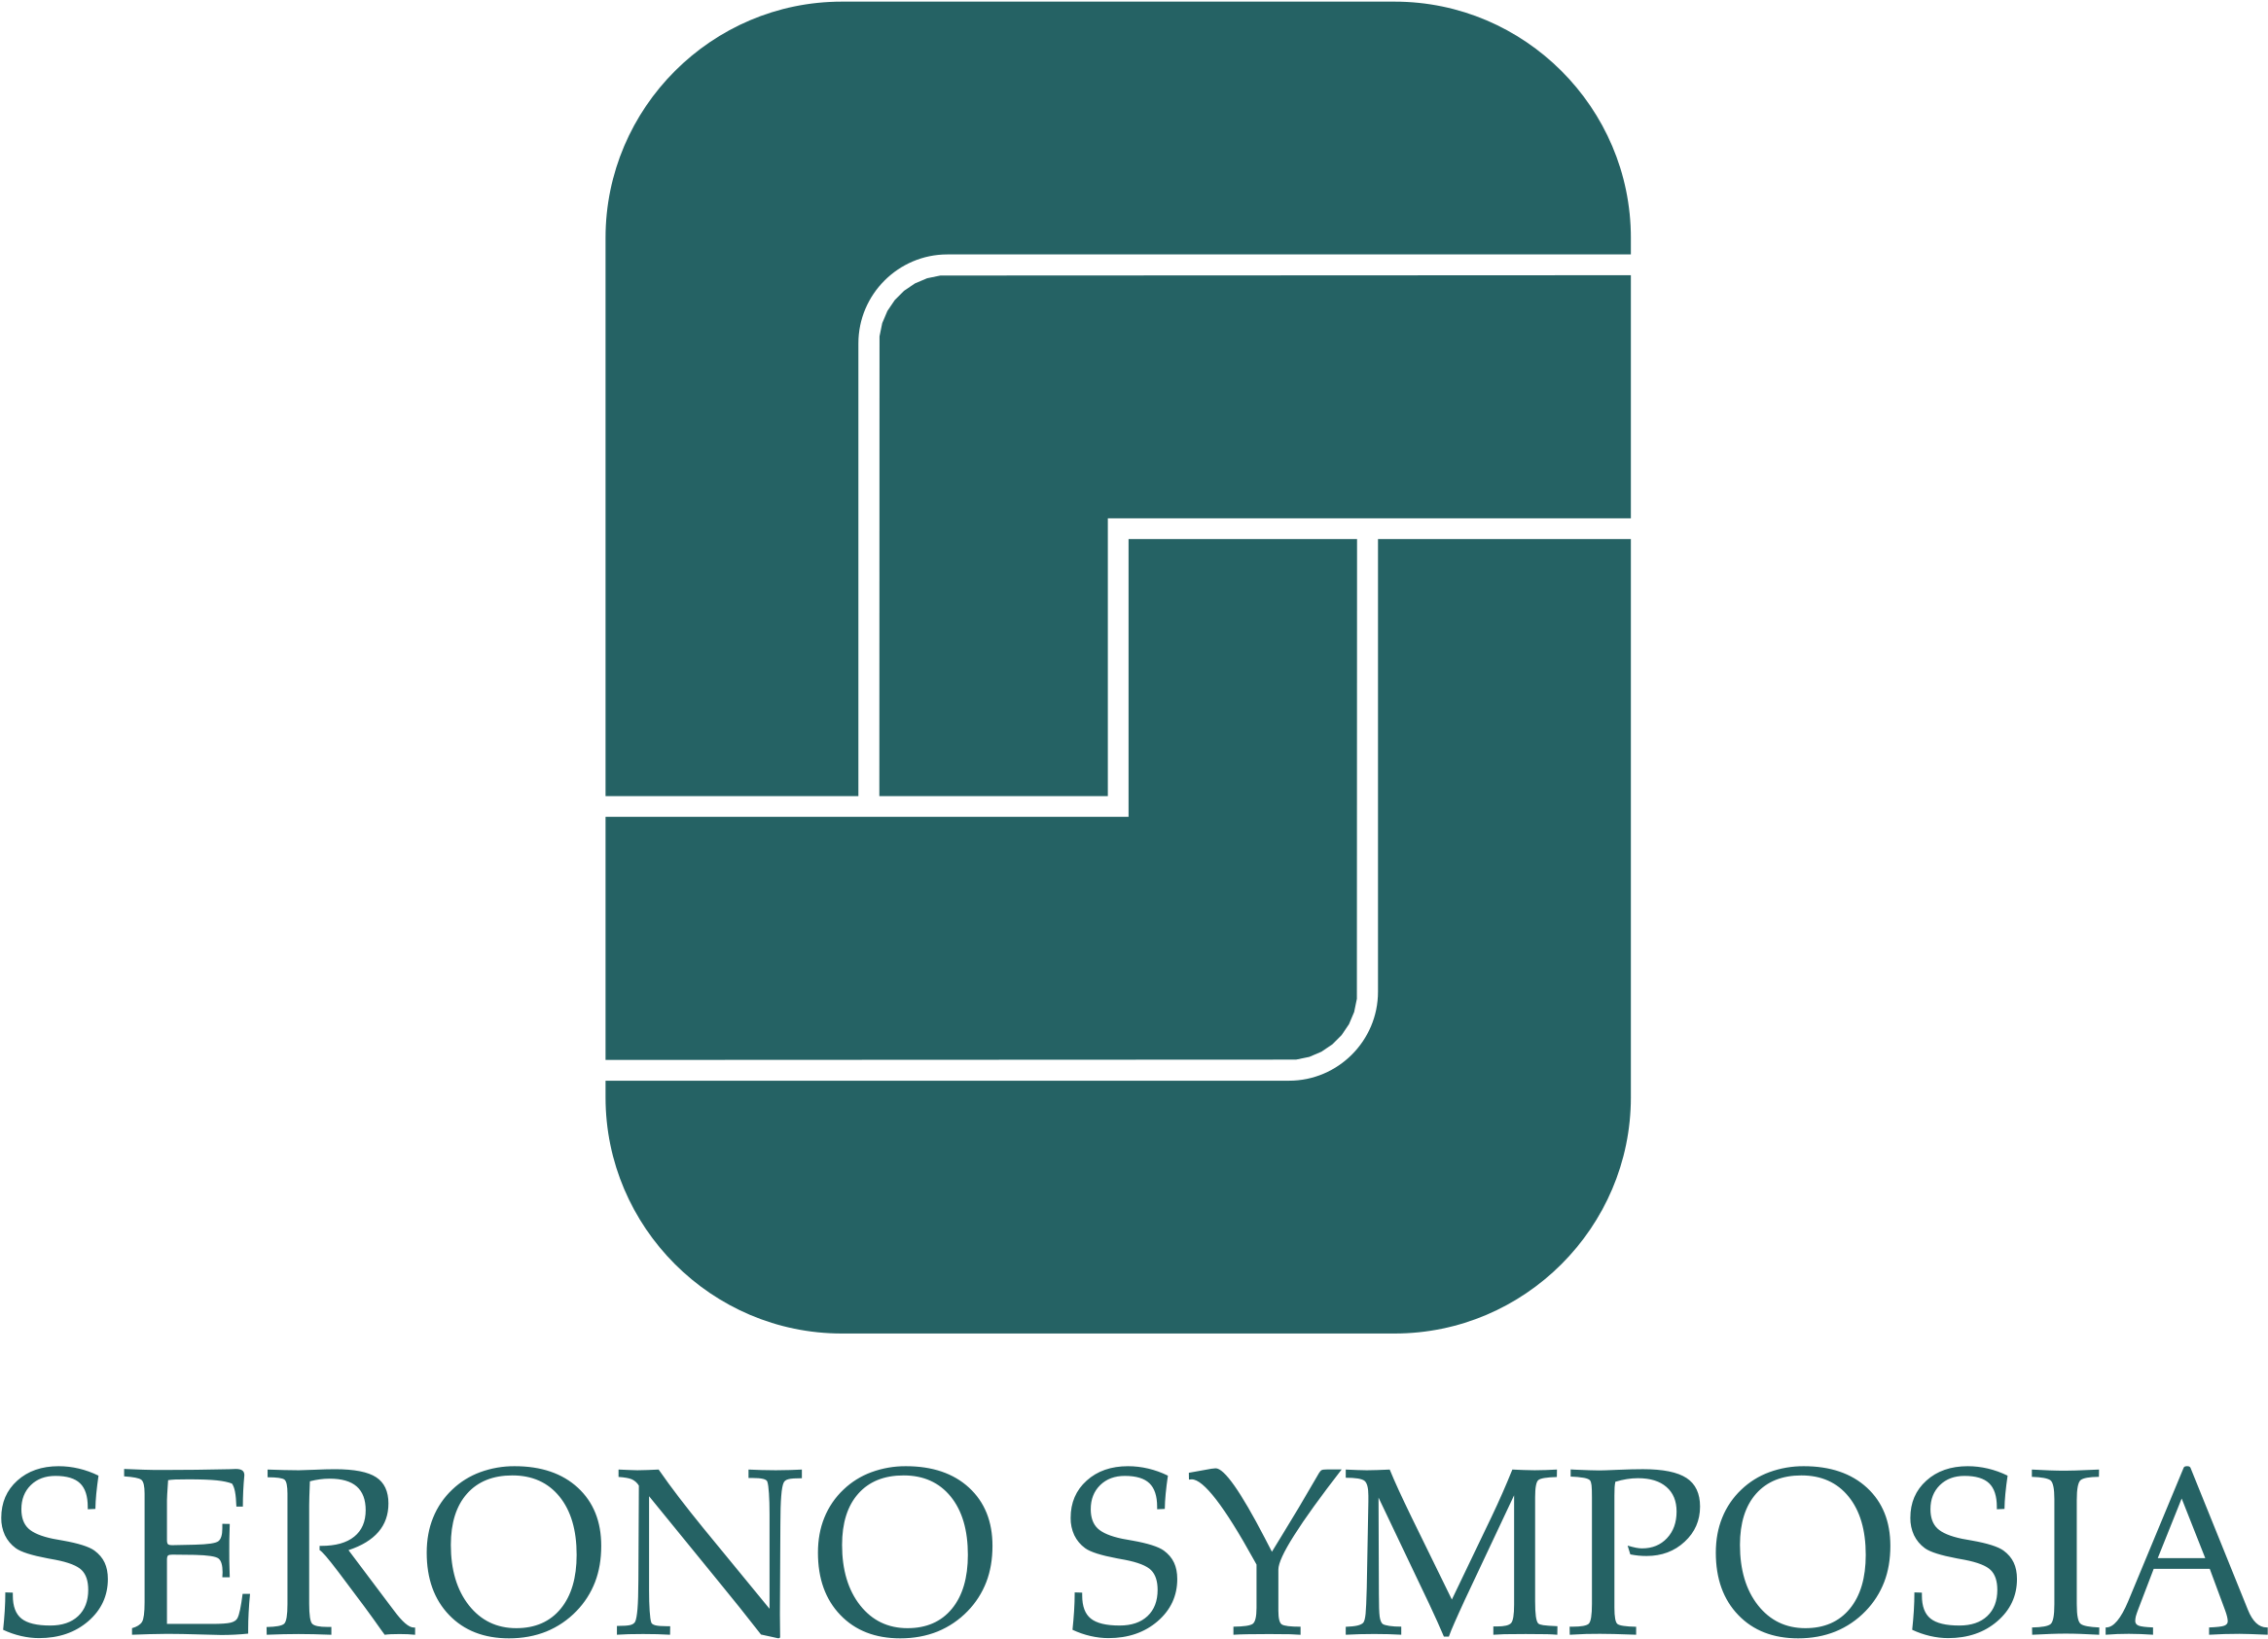 Serono Symposia Logo Png Transparent Svg Vector Freebie - Cumbre De La Tierra (2400x2400)